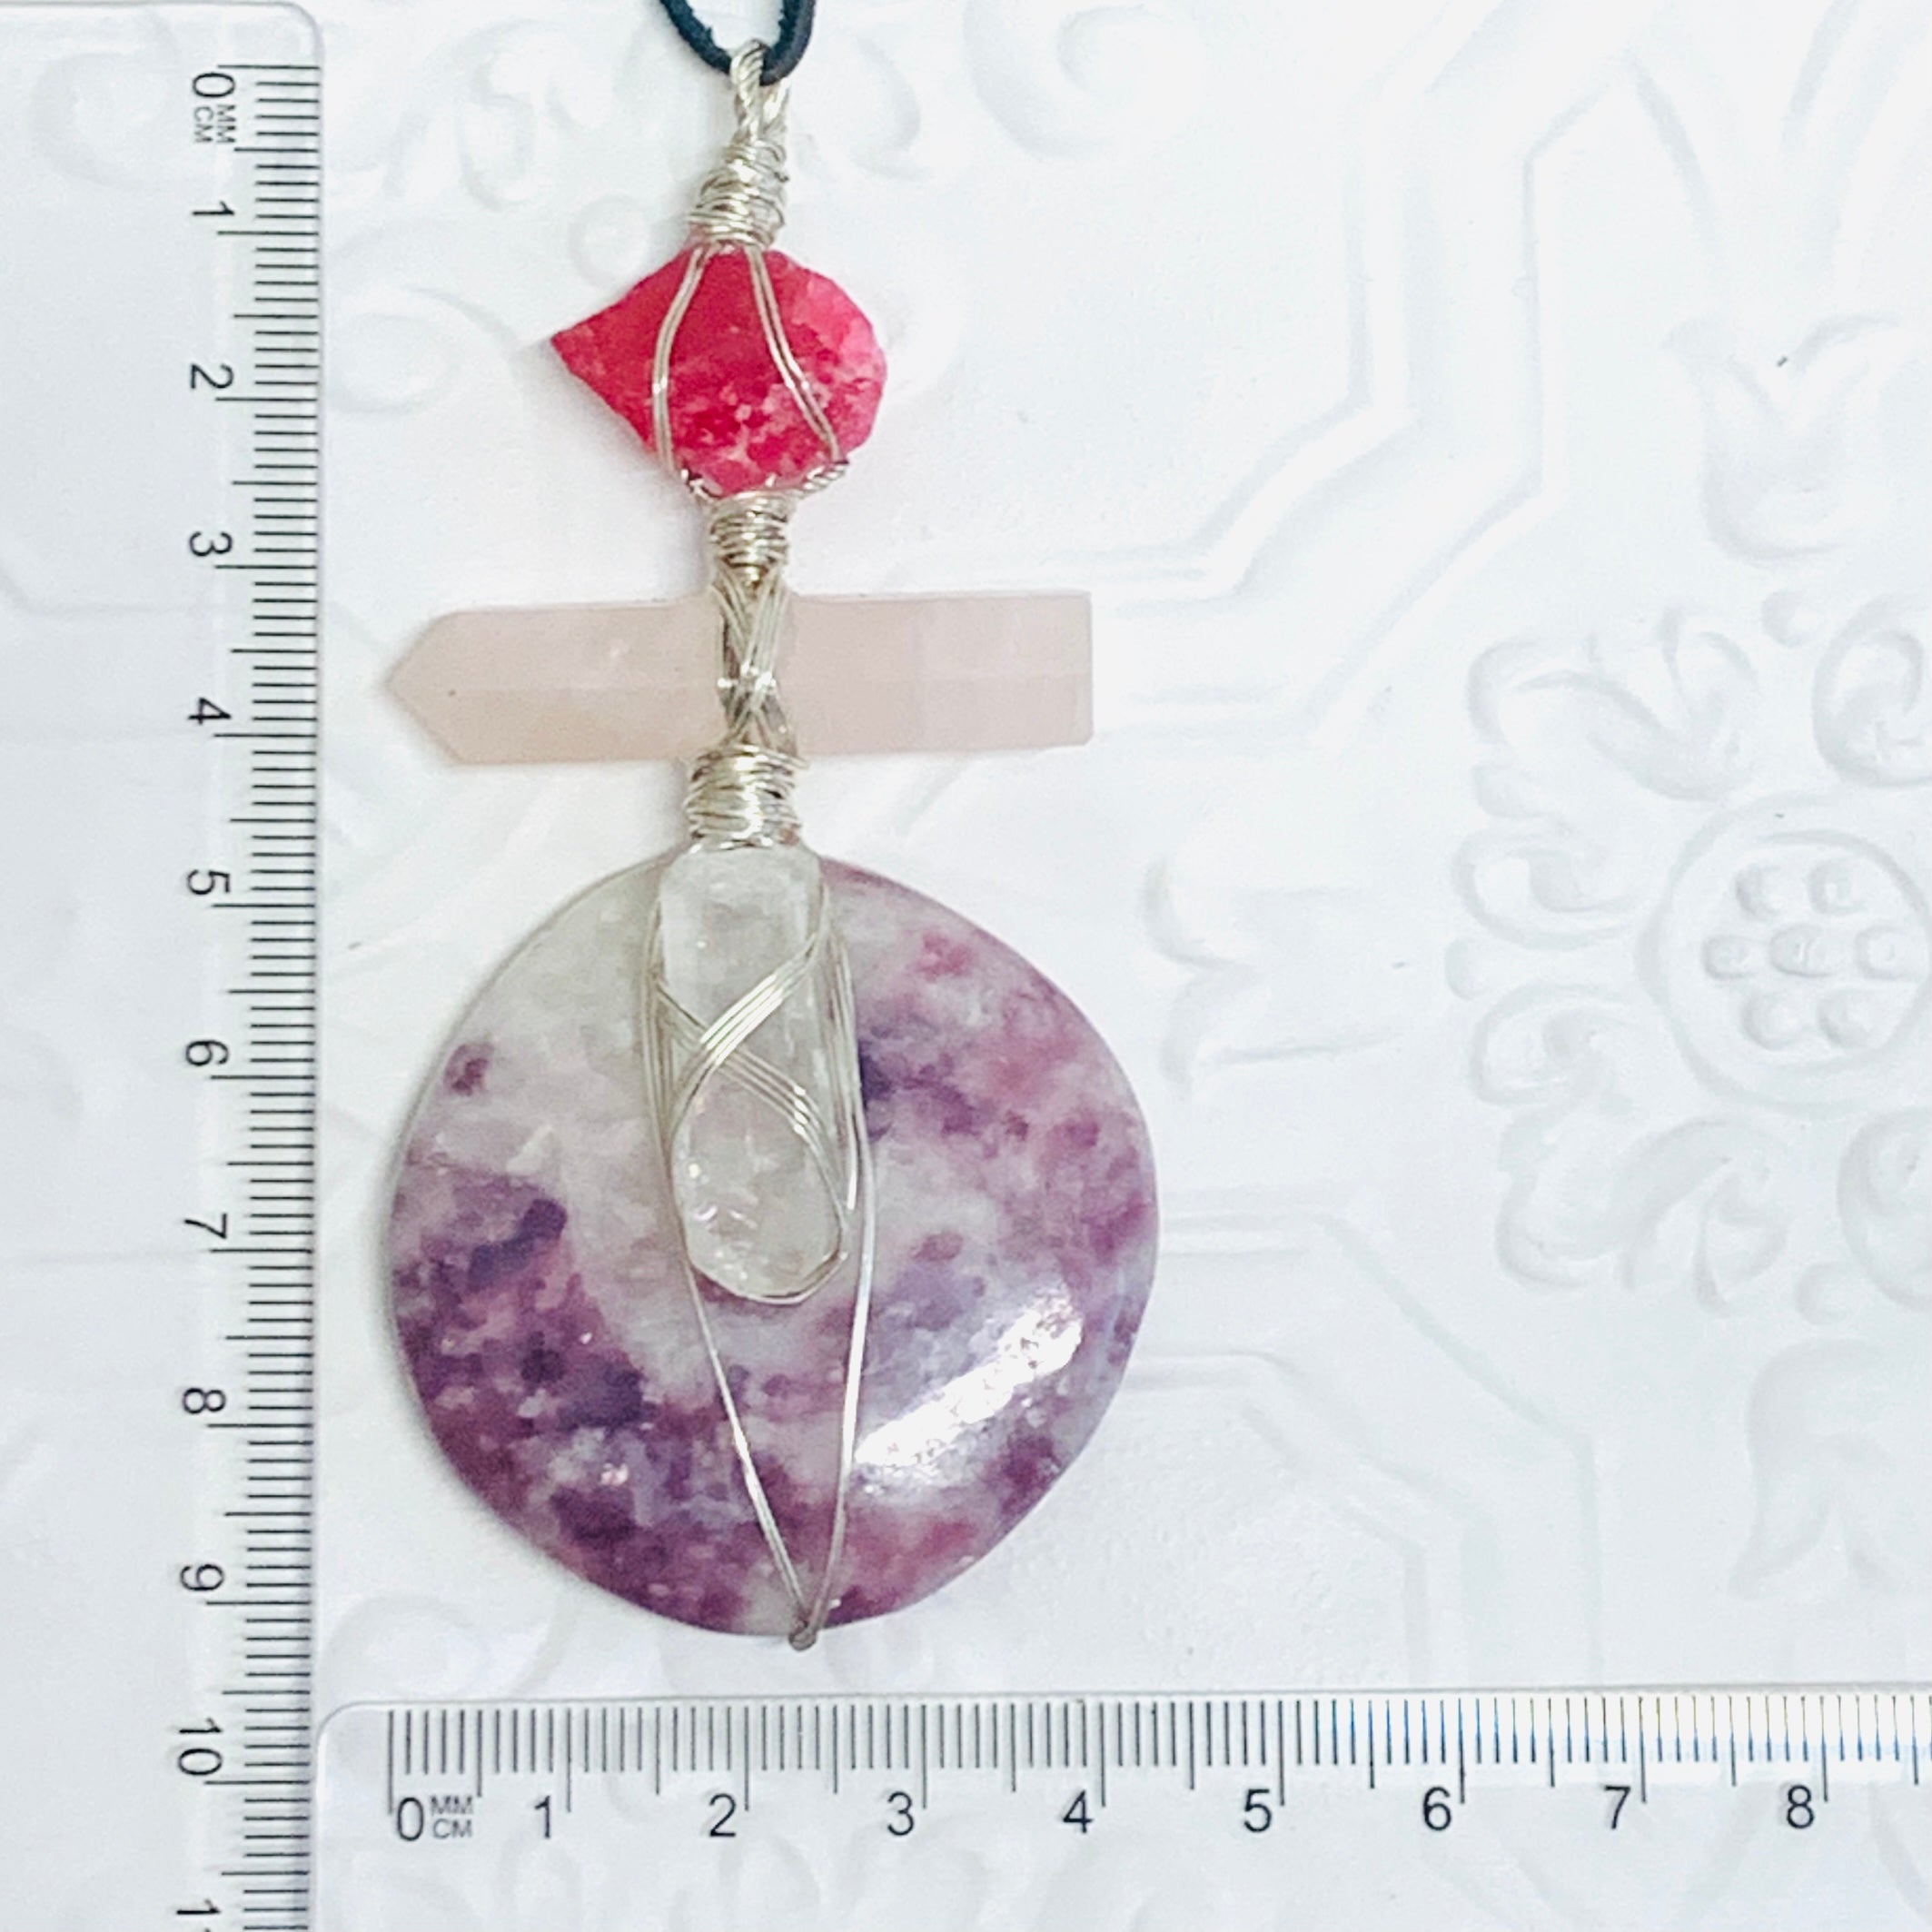 Ruby, Rose Quartz, Quartz and Lepidolite Necklace